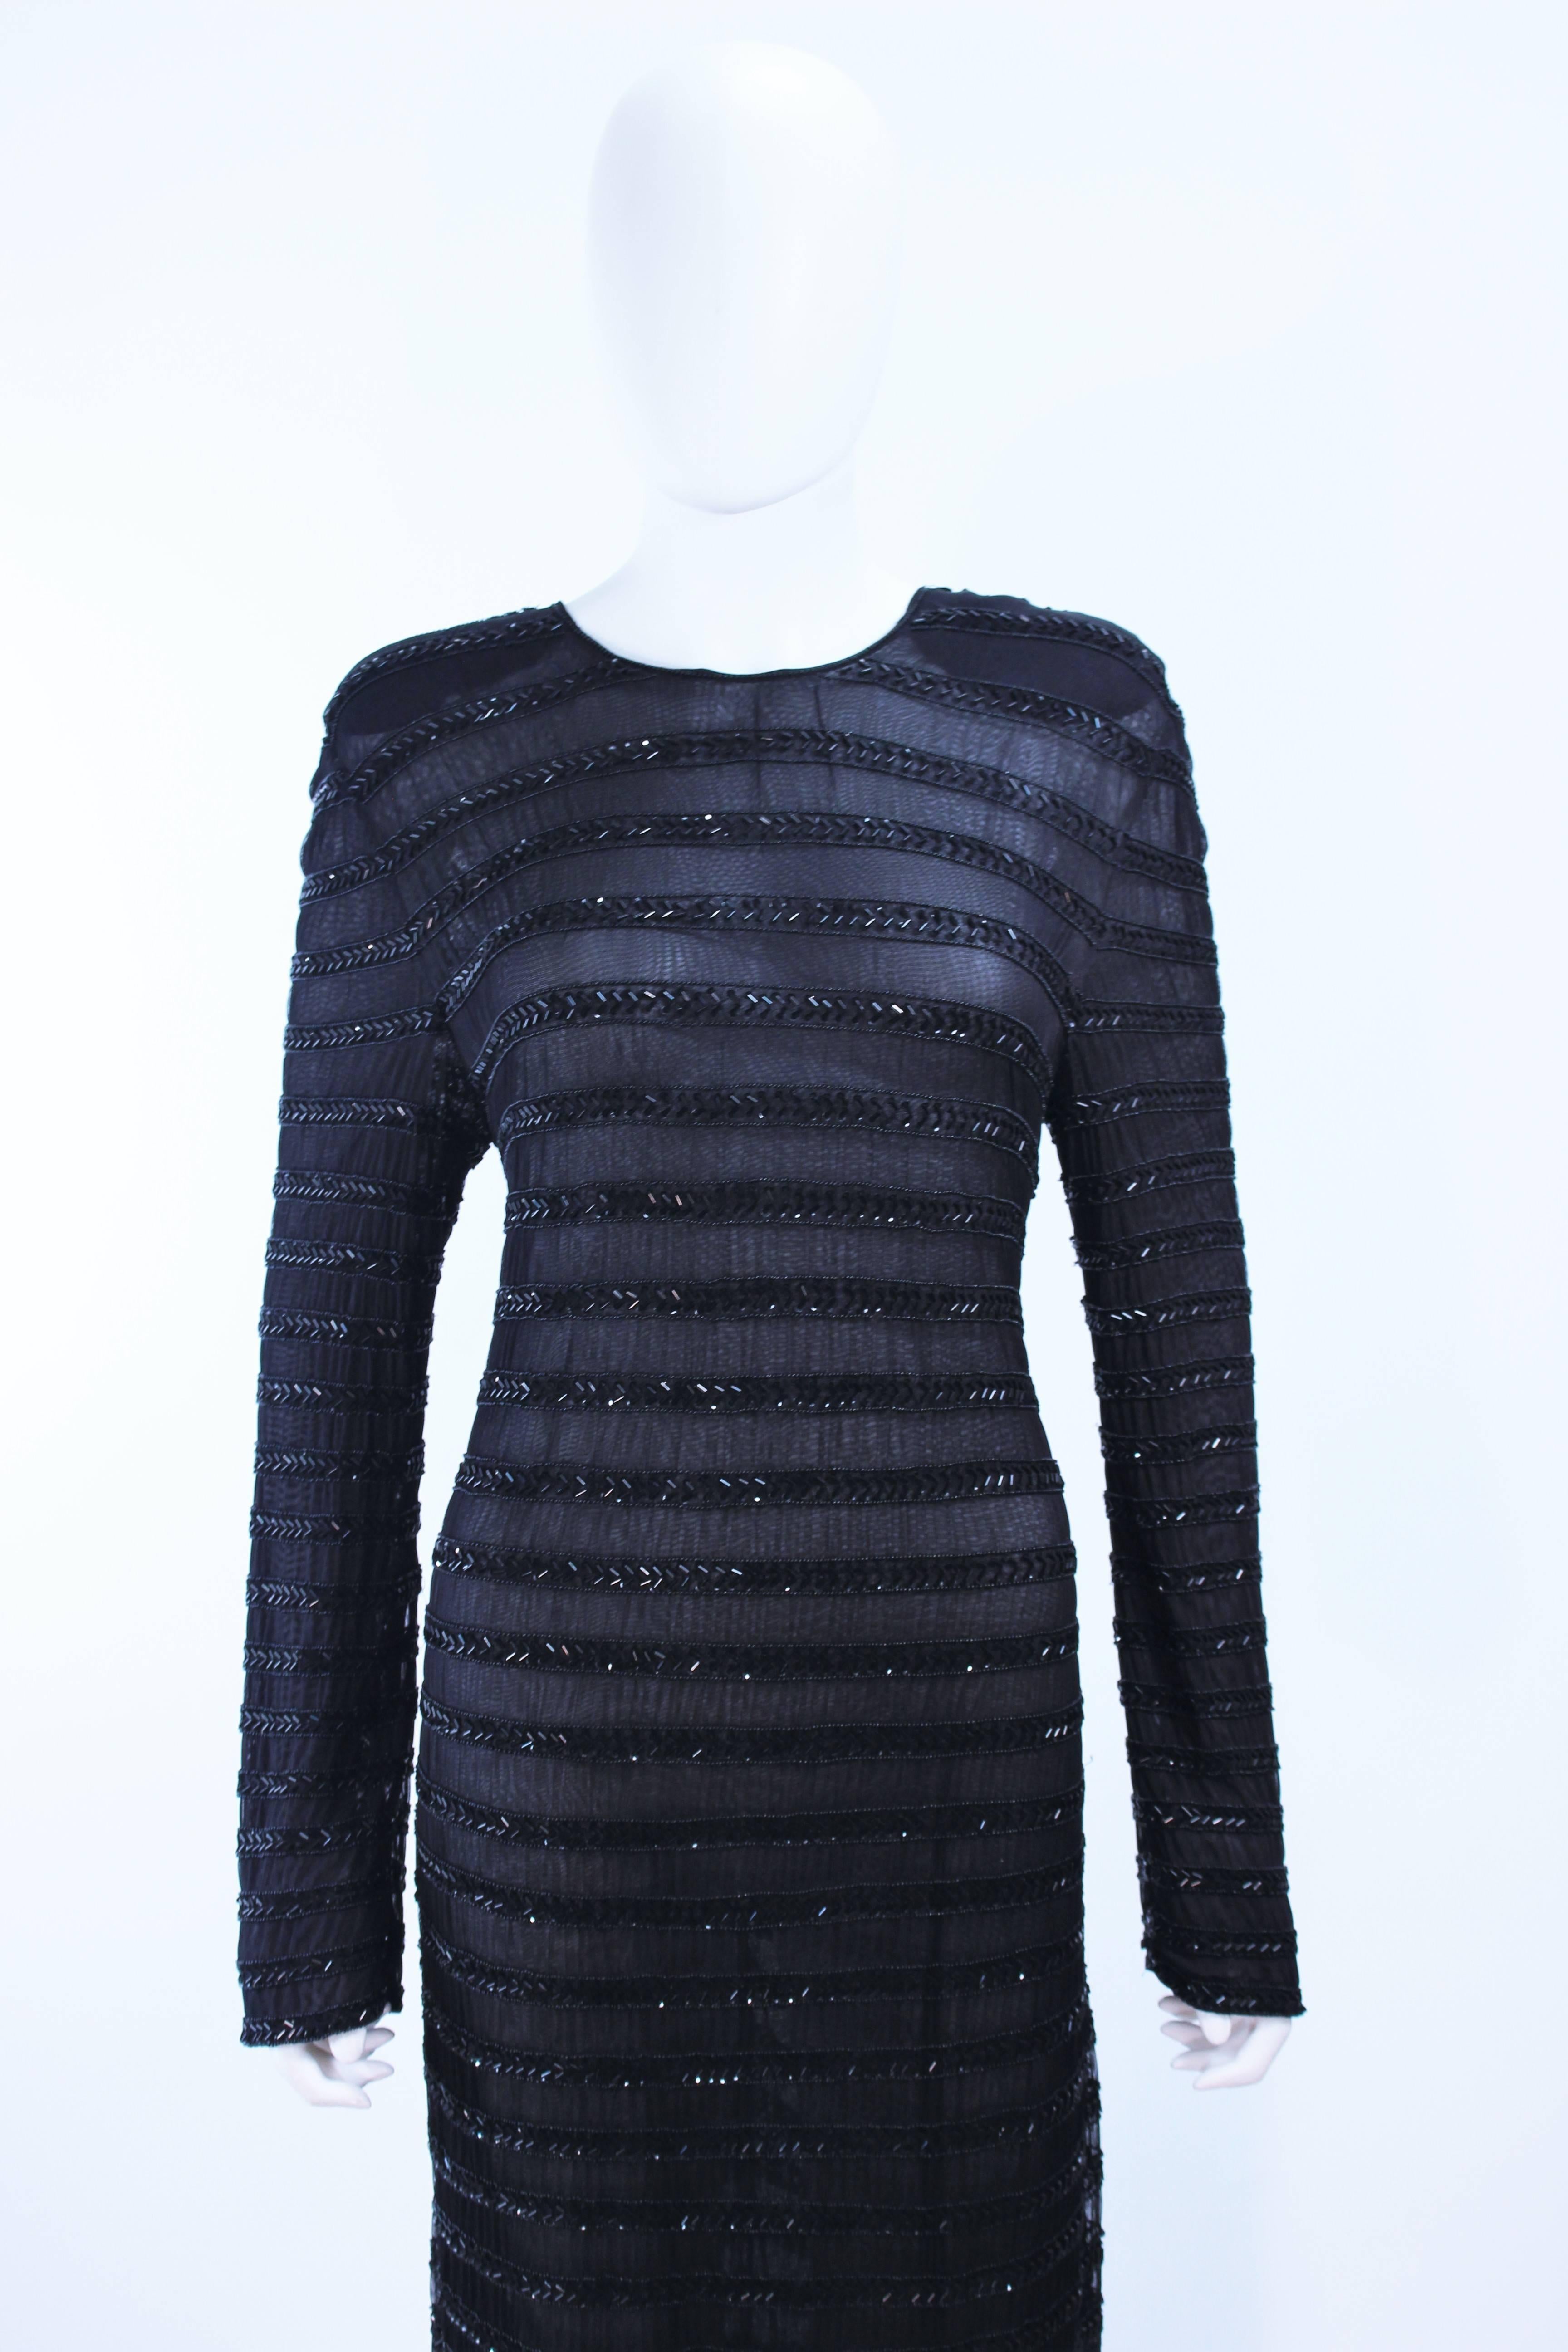 Noir GIORGIO ARMANI - Robe en maille transparente perlée noire, taille 42 en vente